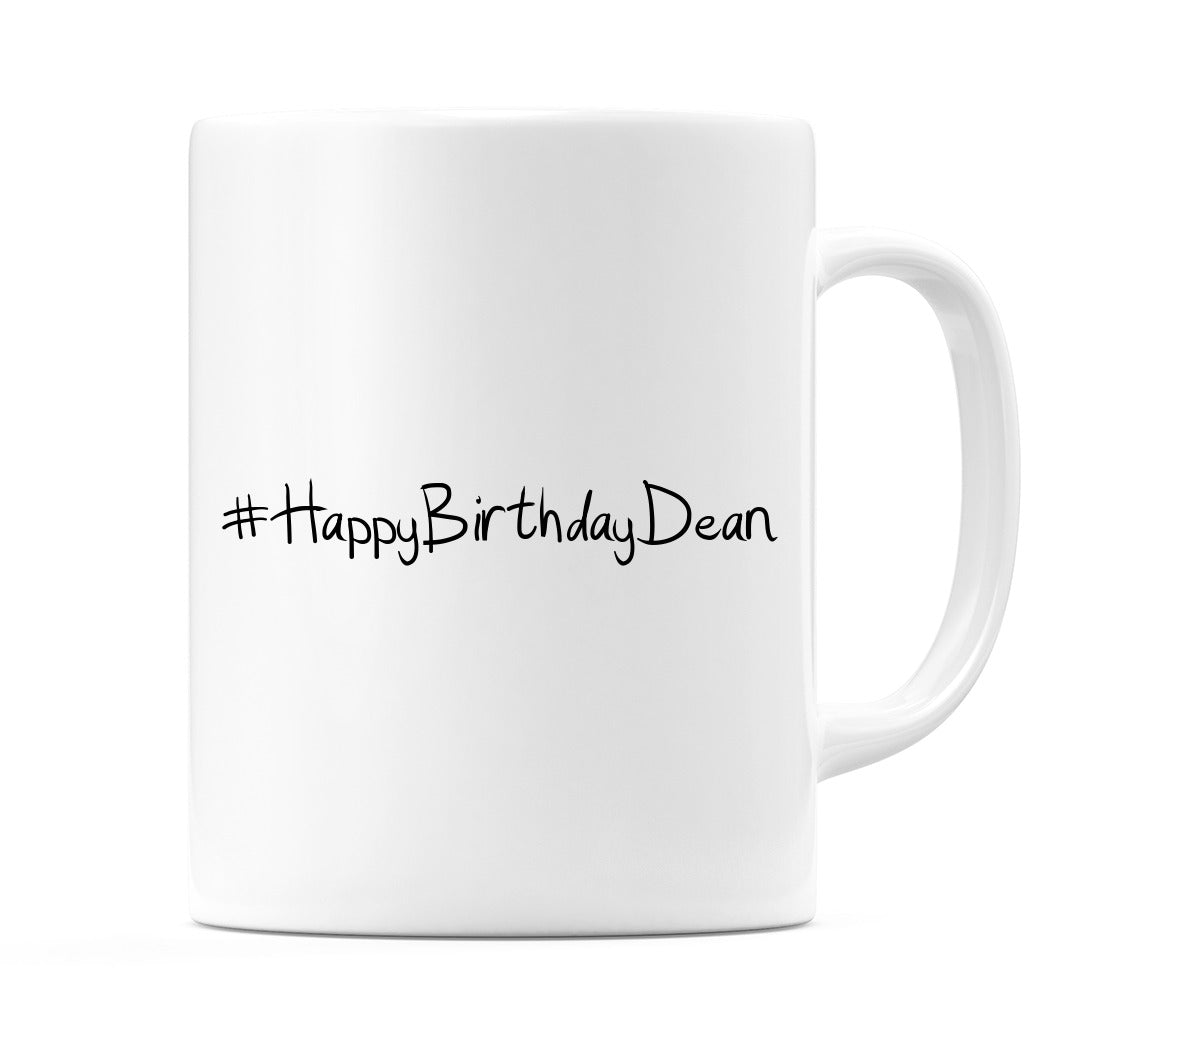 #HappyBirthdayDean Mug